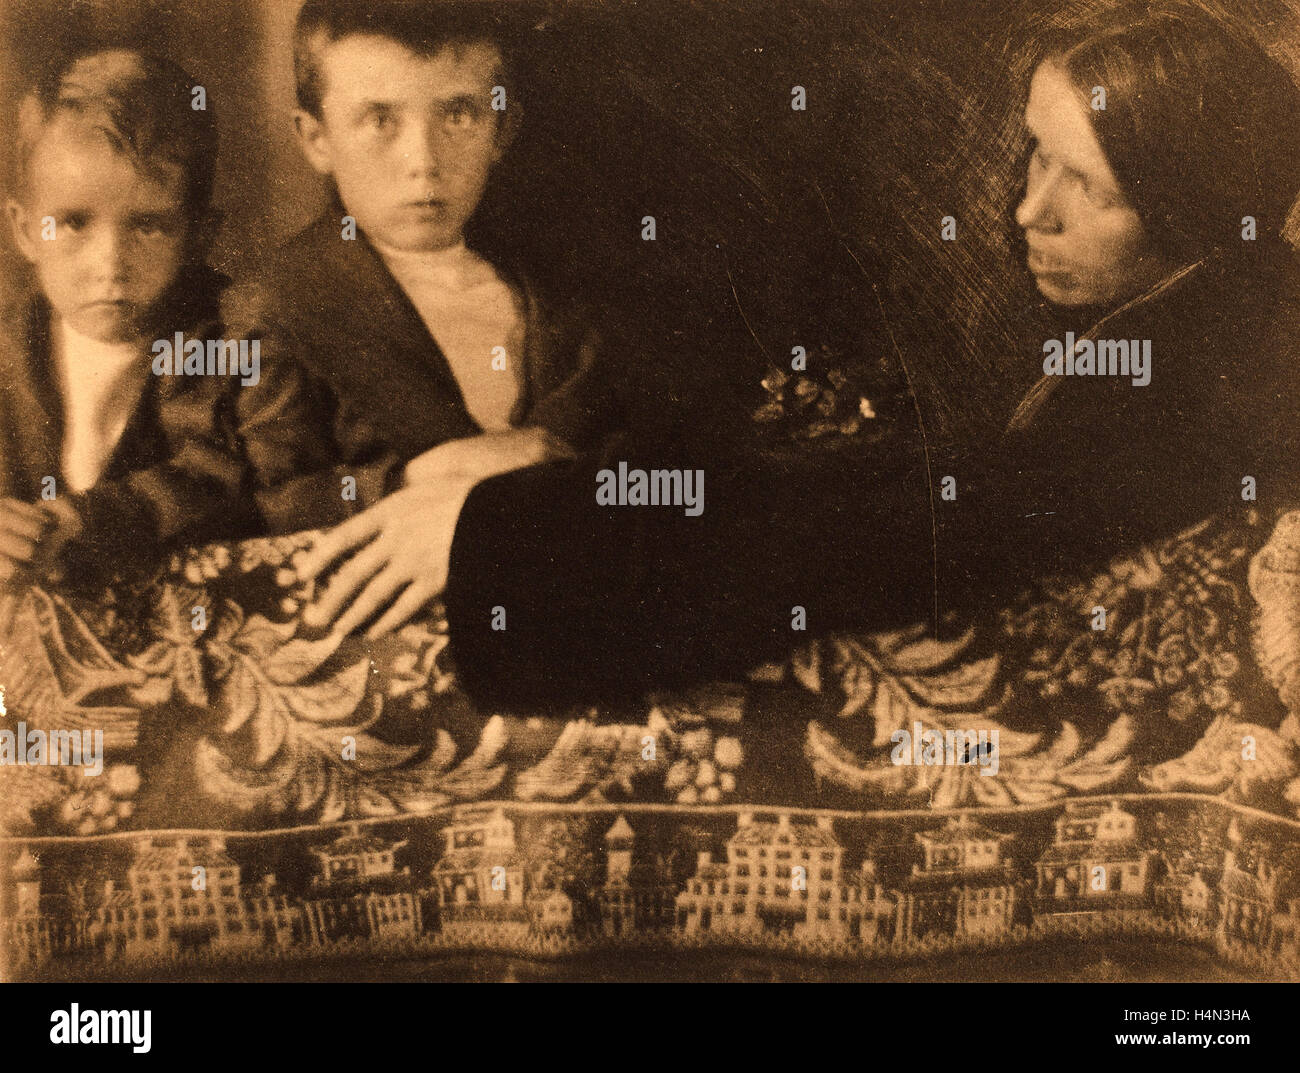 Gertrude Käsebier, Familiengruppe (Mrs White, Maynard & Lewis), American,  1852-1934, c. 1899, Platin print Stockfotografie - Alamy